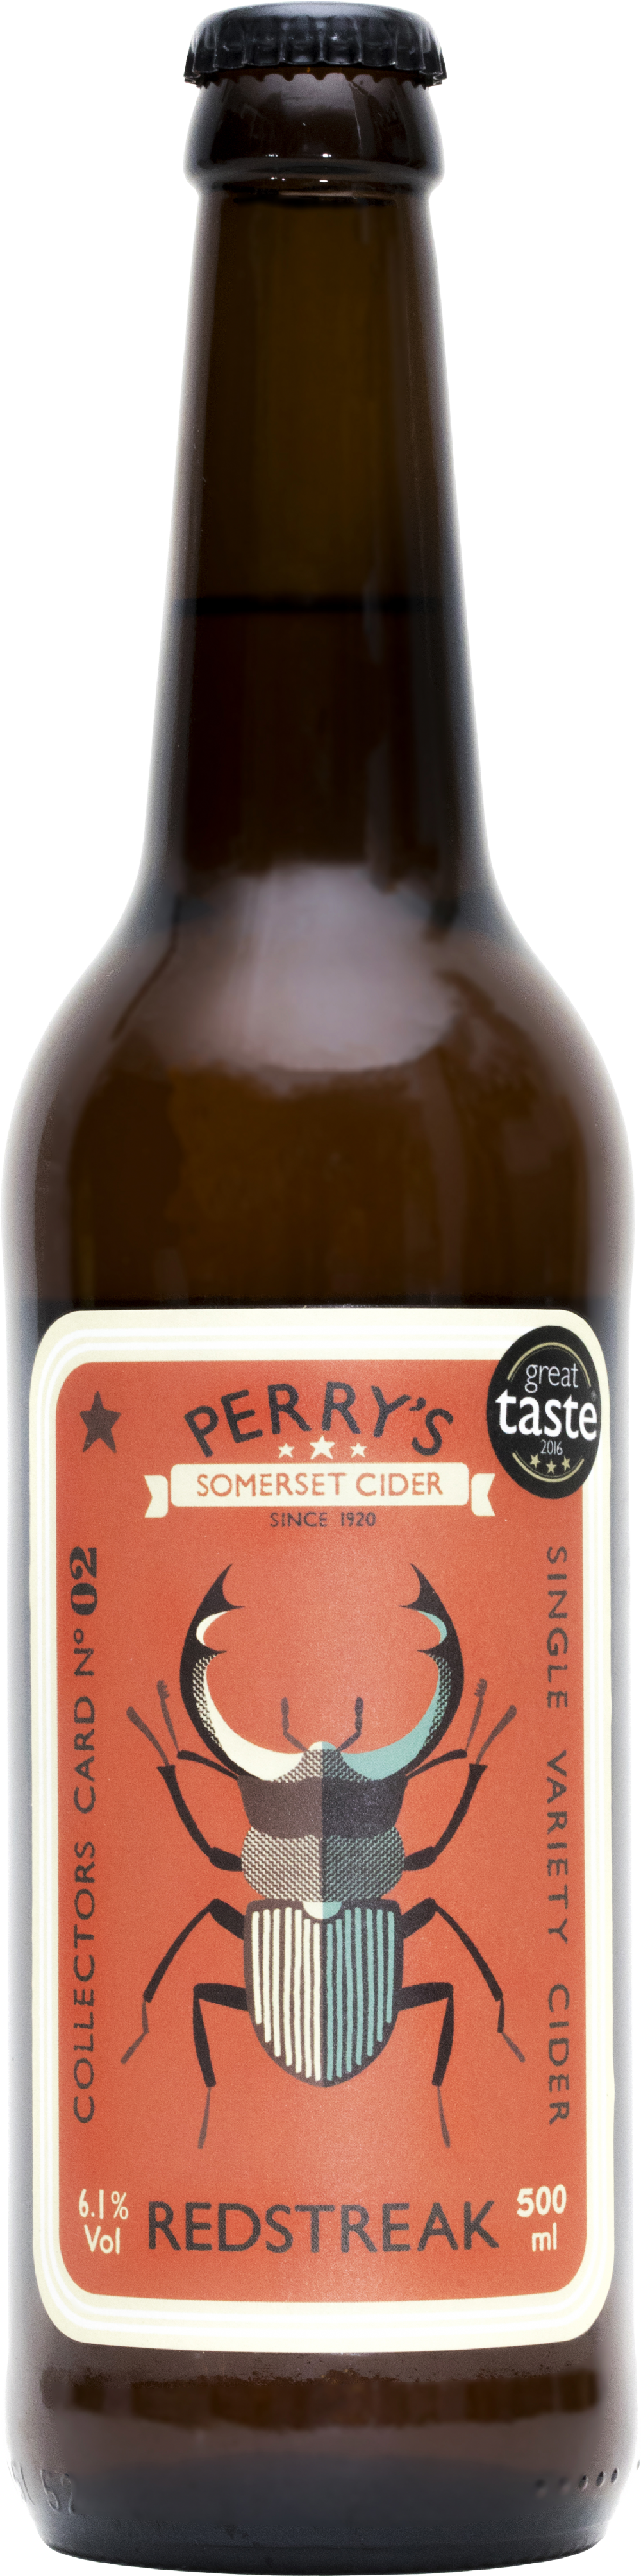 PERRY'S Somerset Redstreak Cider 500ml 6% ABV